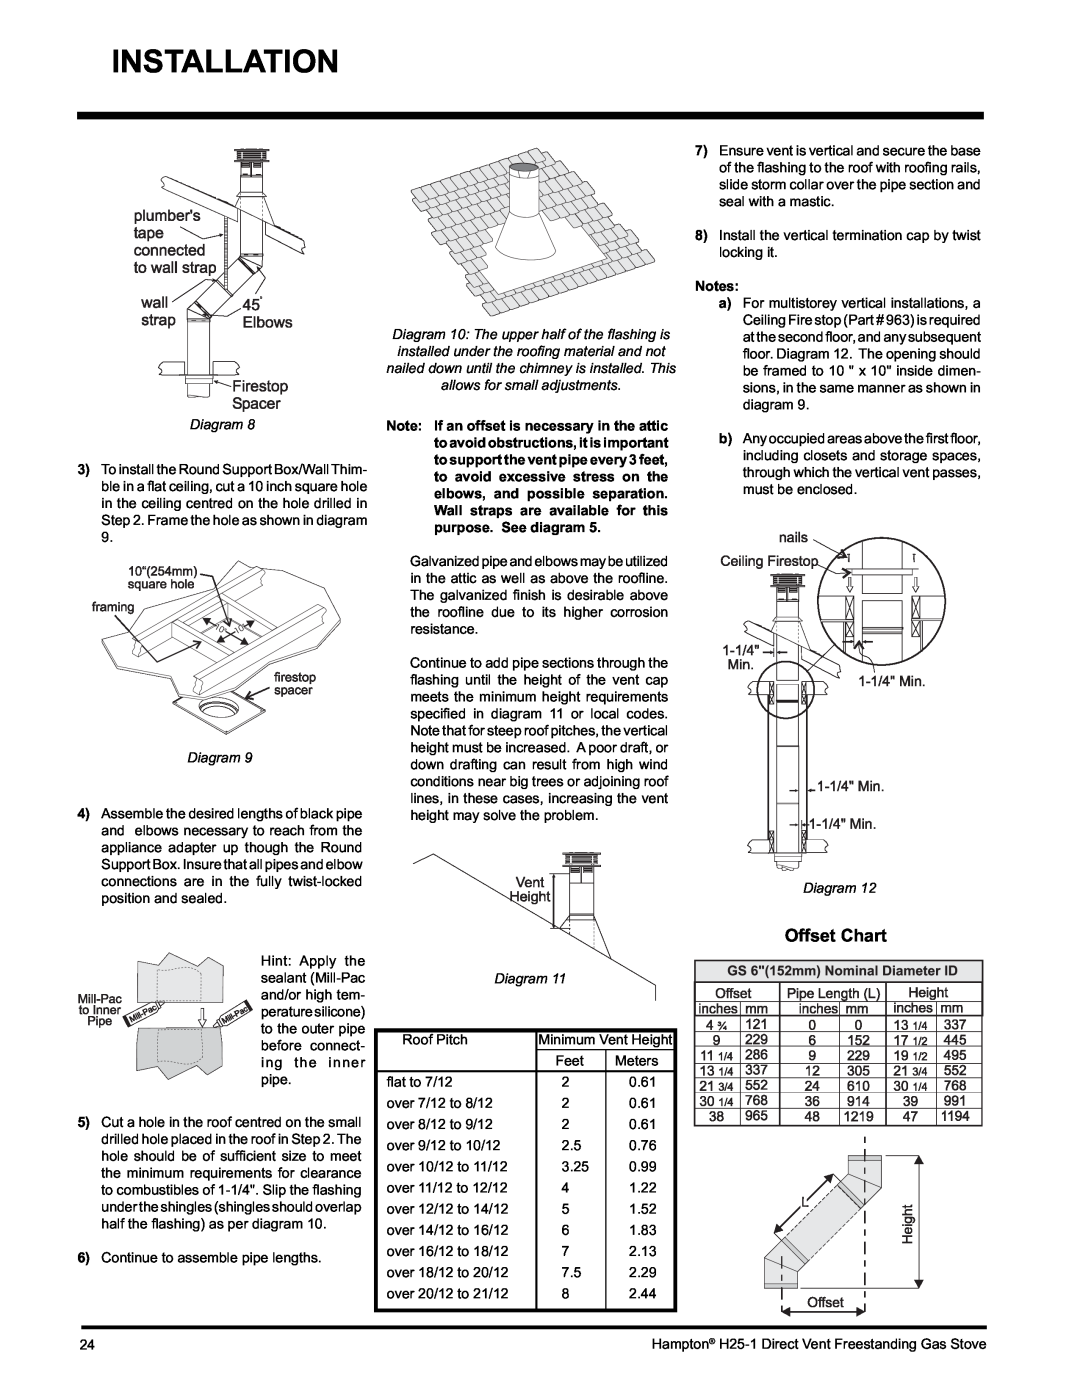 Hampton Direct H25-NG1, H25-LP1 installation manual Installation, Diagram 